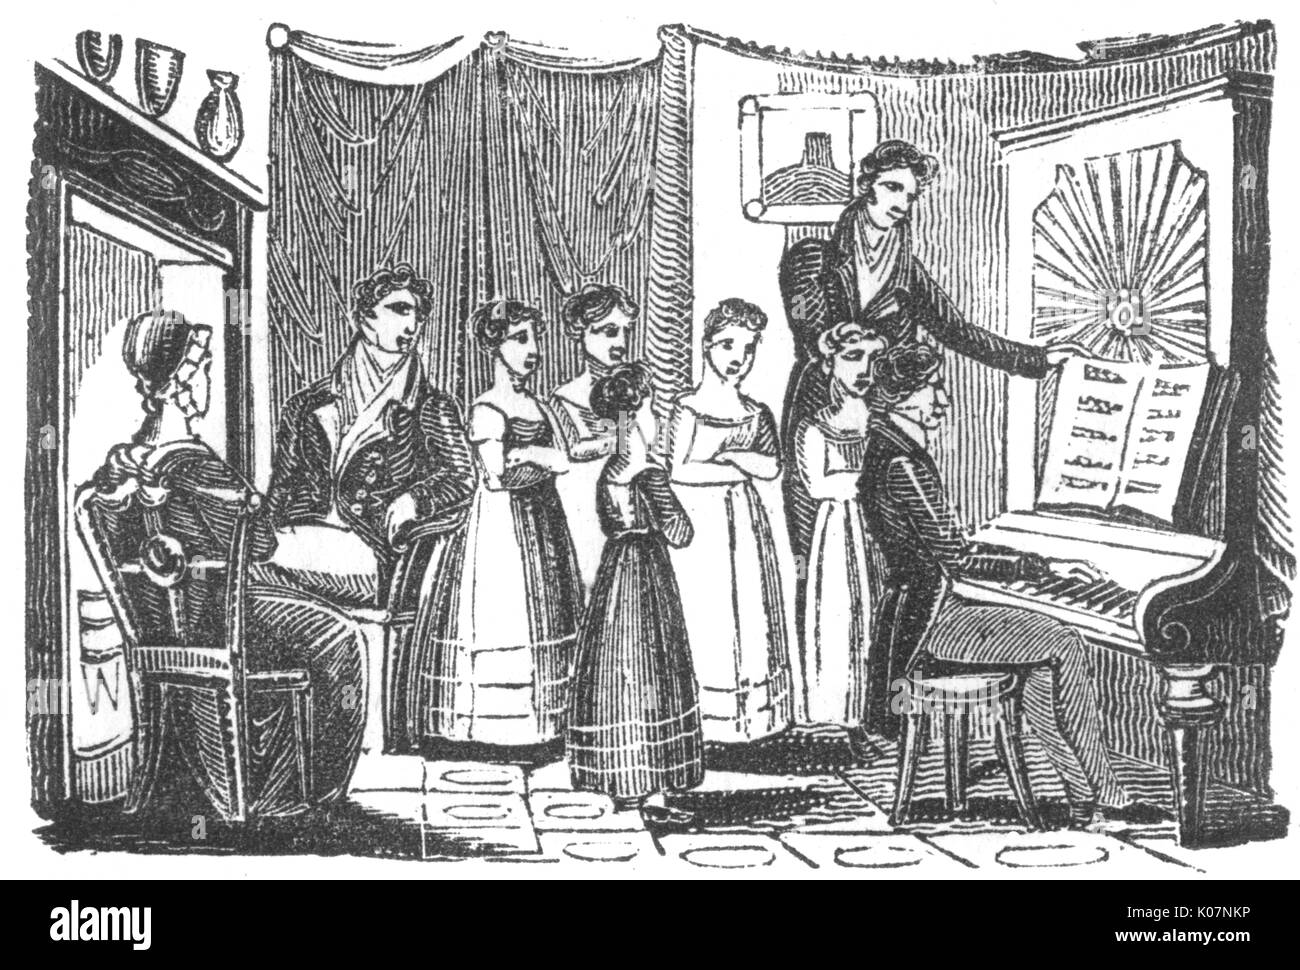 Piano recital group, c. 1800 Stock Photo